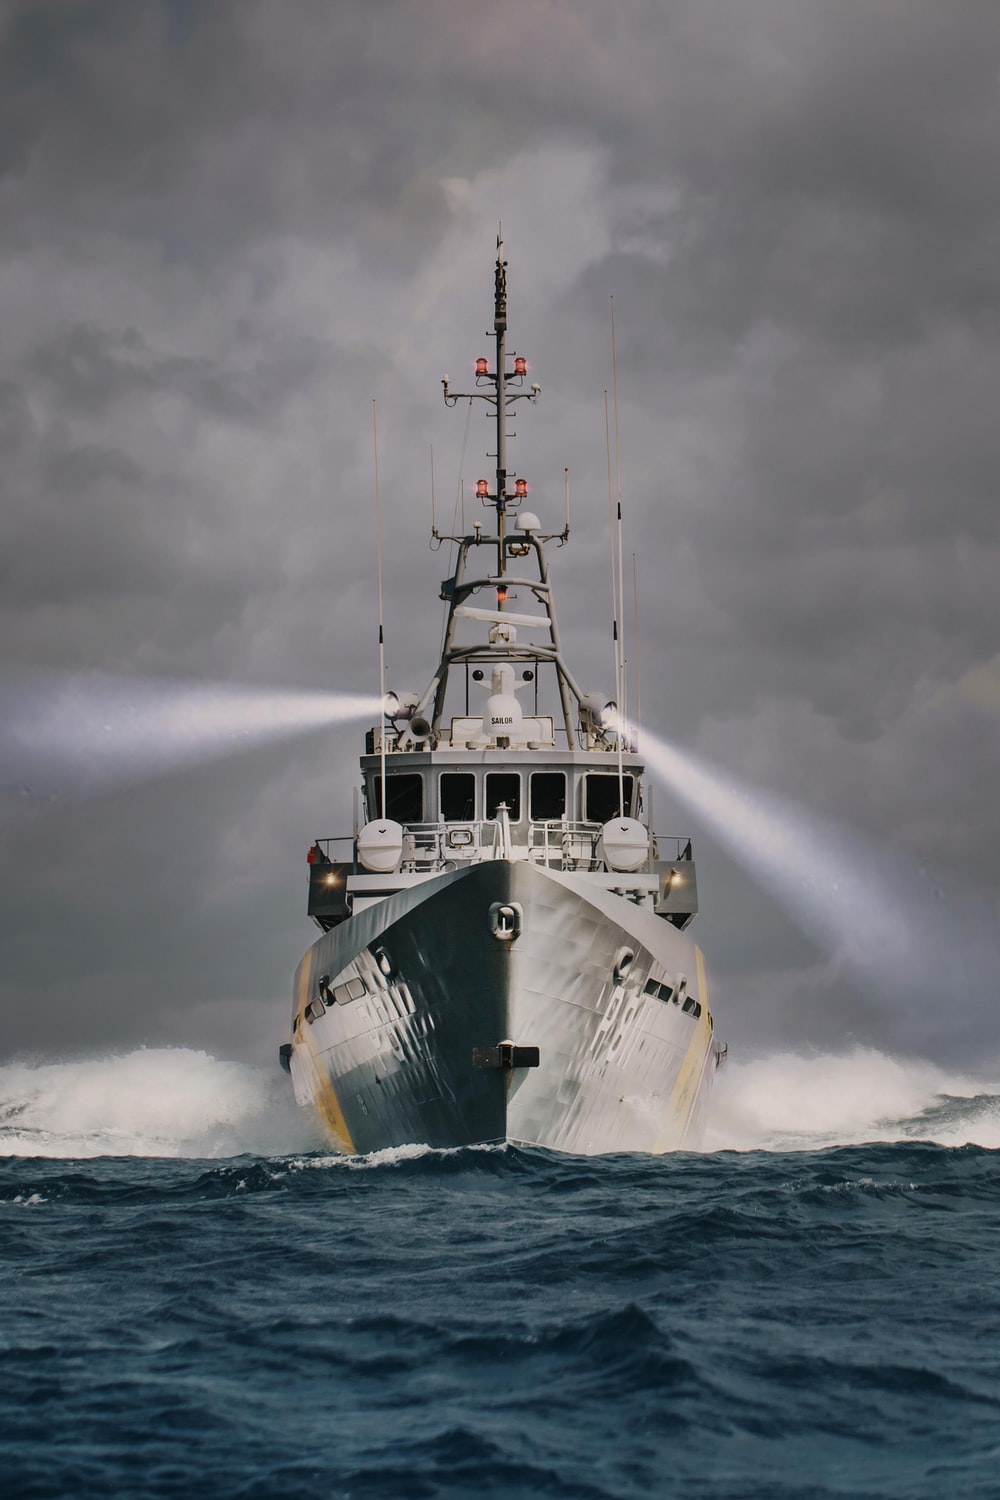 Battleship Picture. Download Free Image